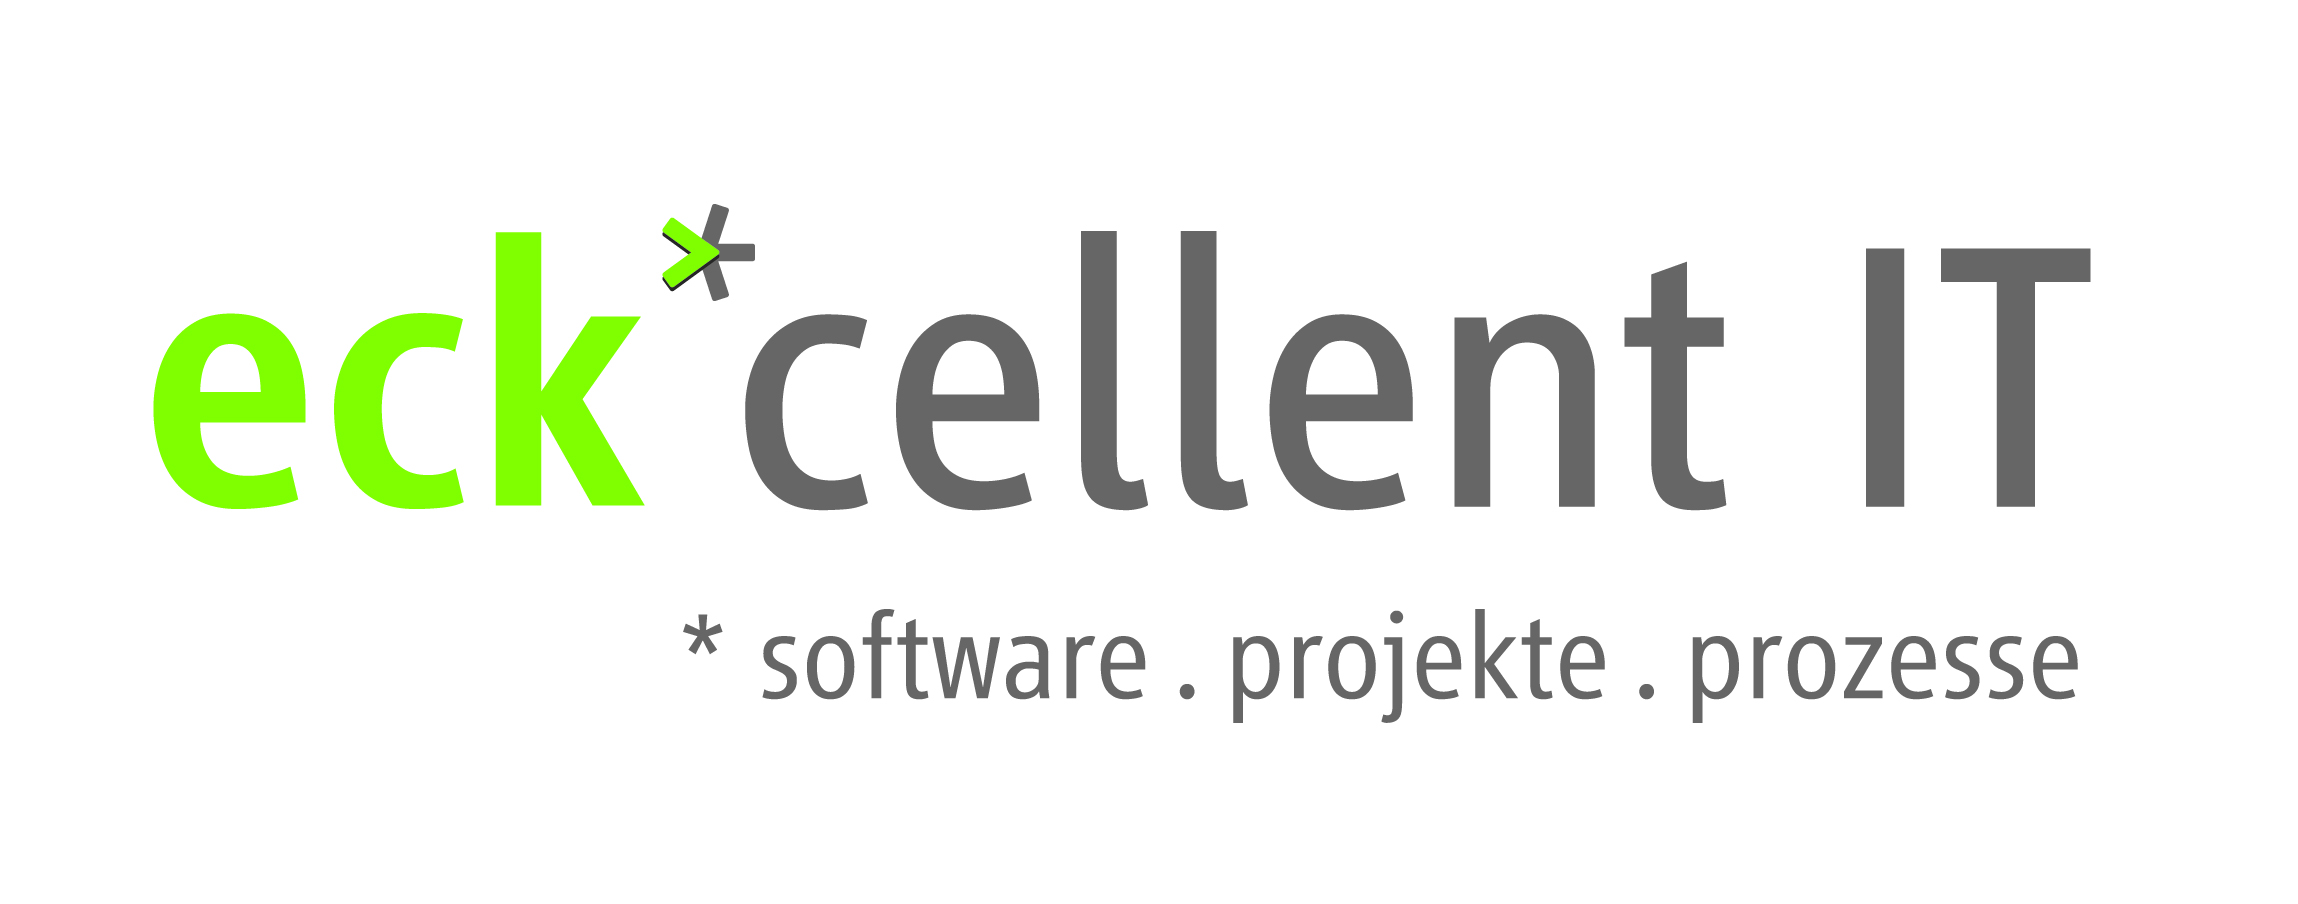 eck_Logo_claim_software